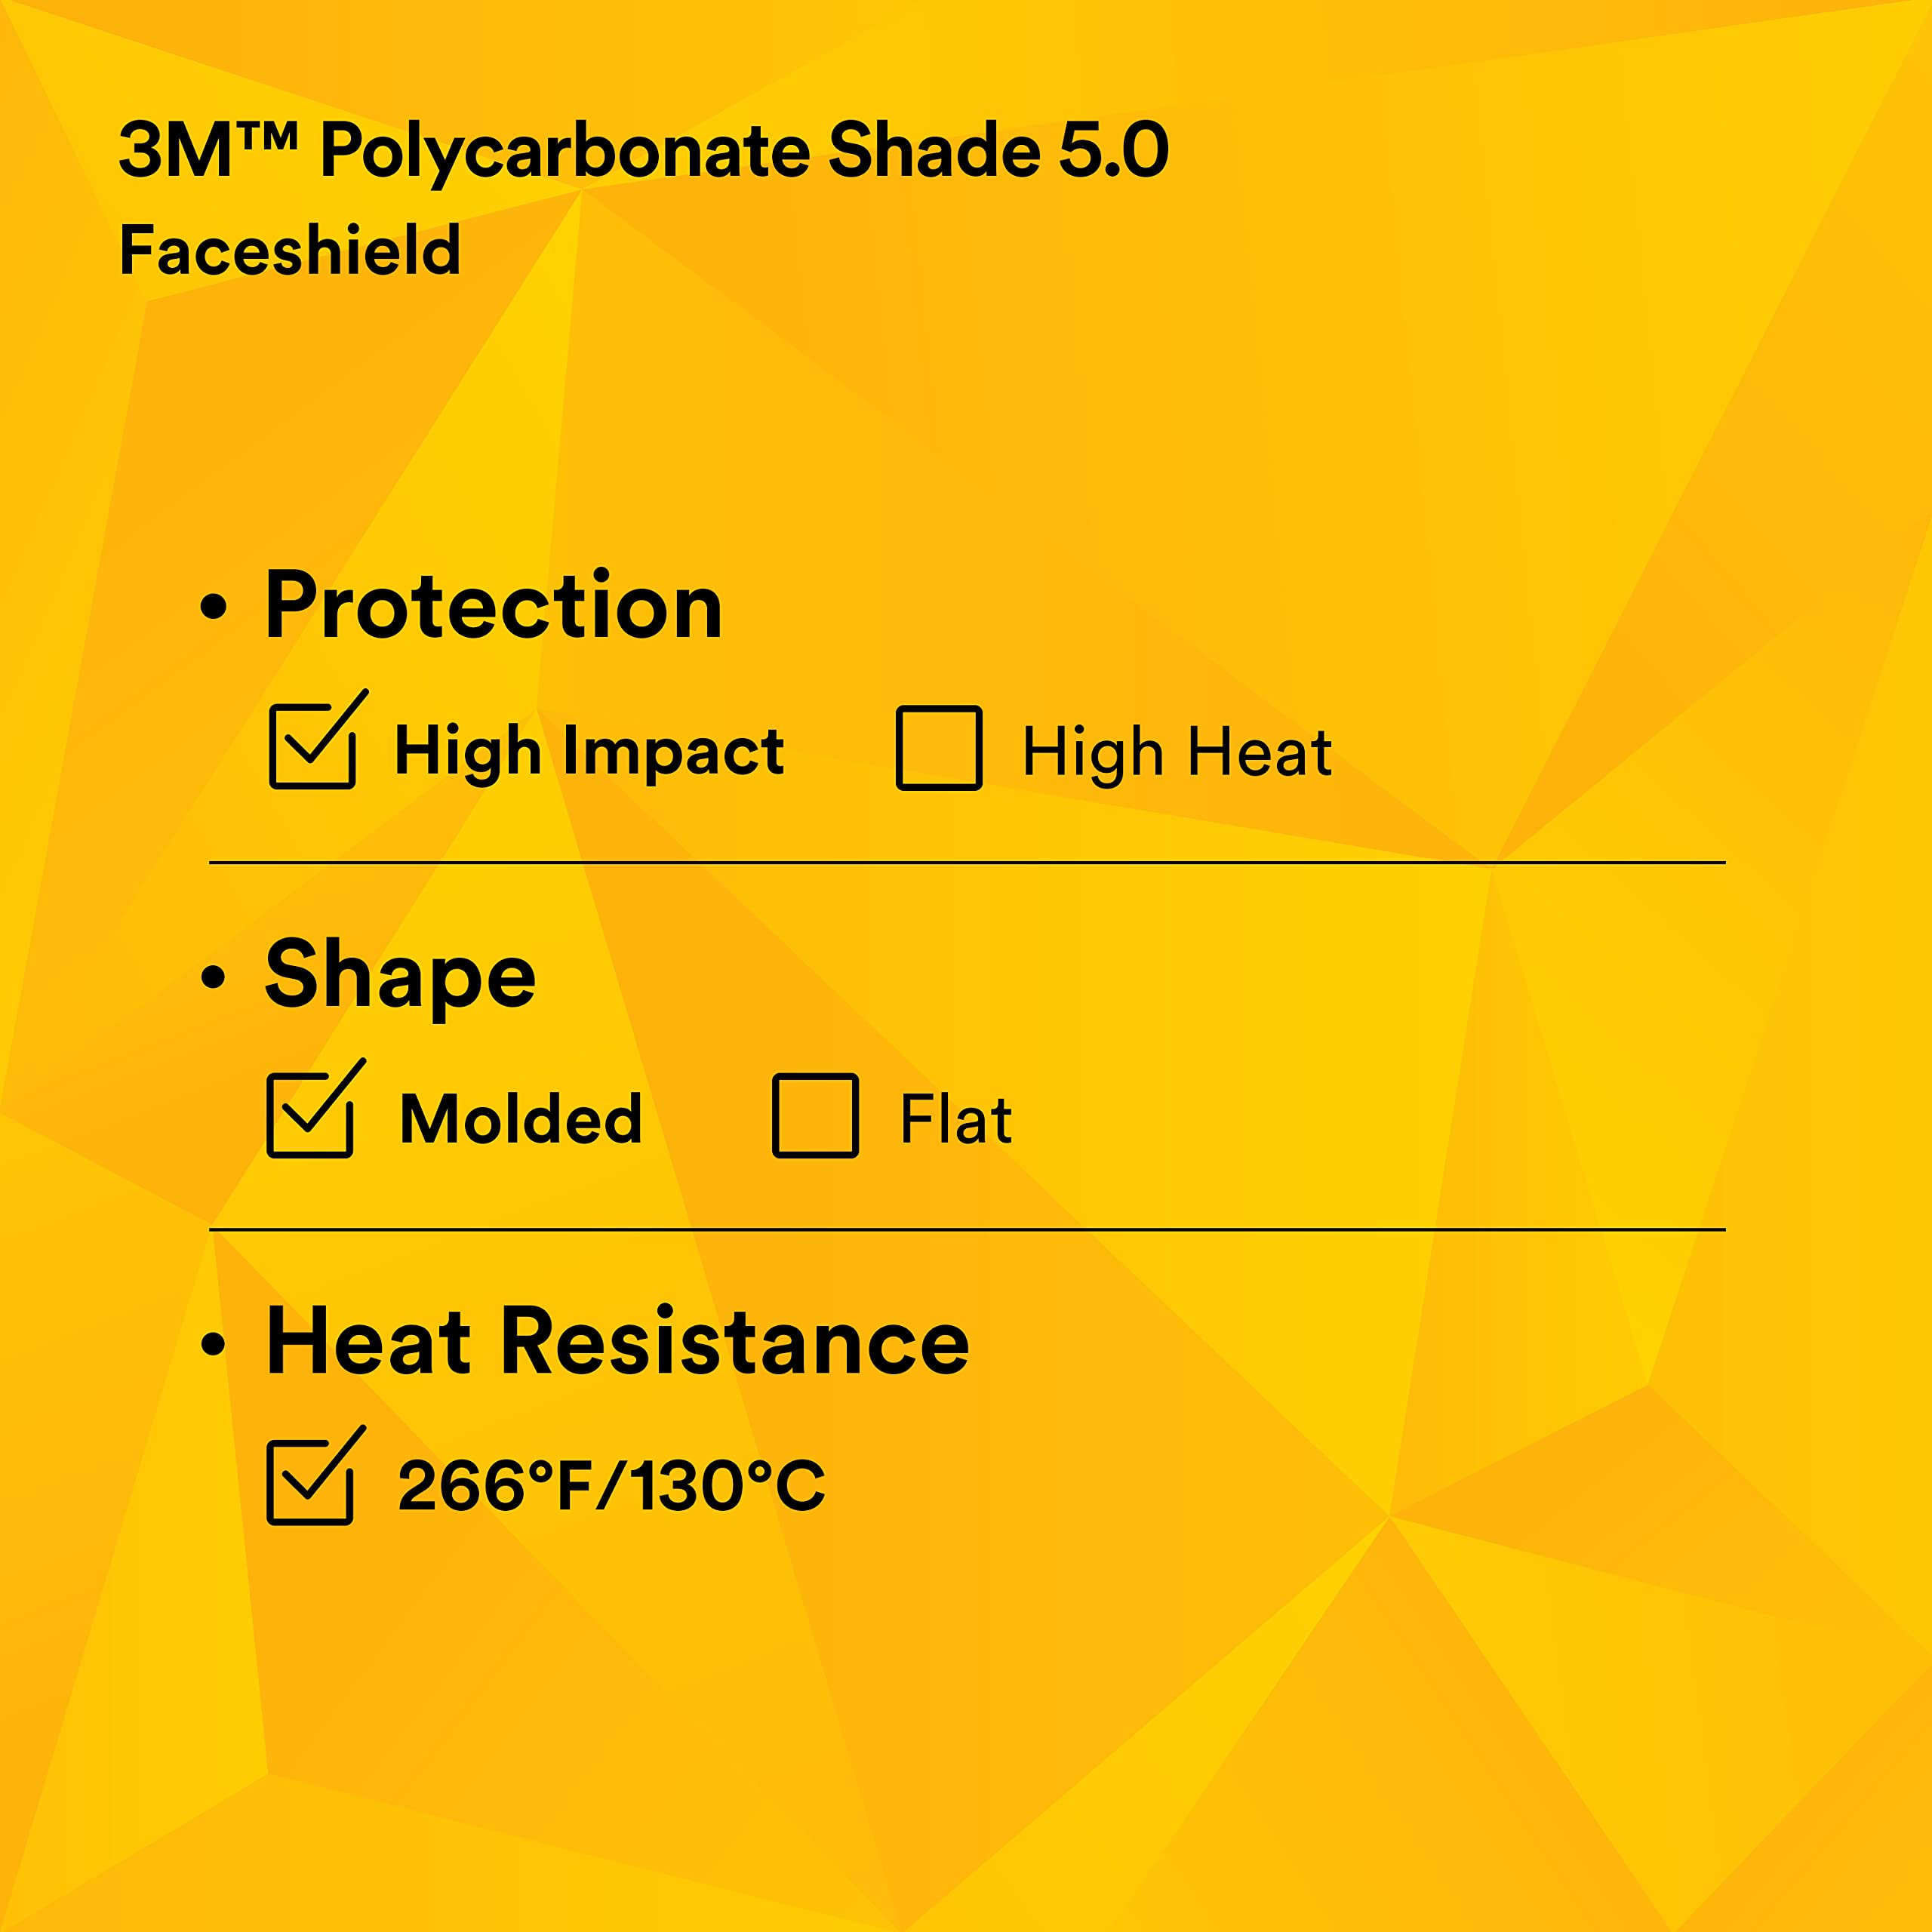 3M Polycarbonate Faceshield Window W96IR5, 82706-10000, Shade 5.0, 9